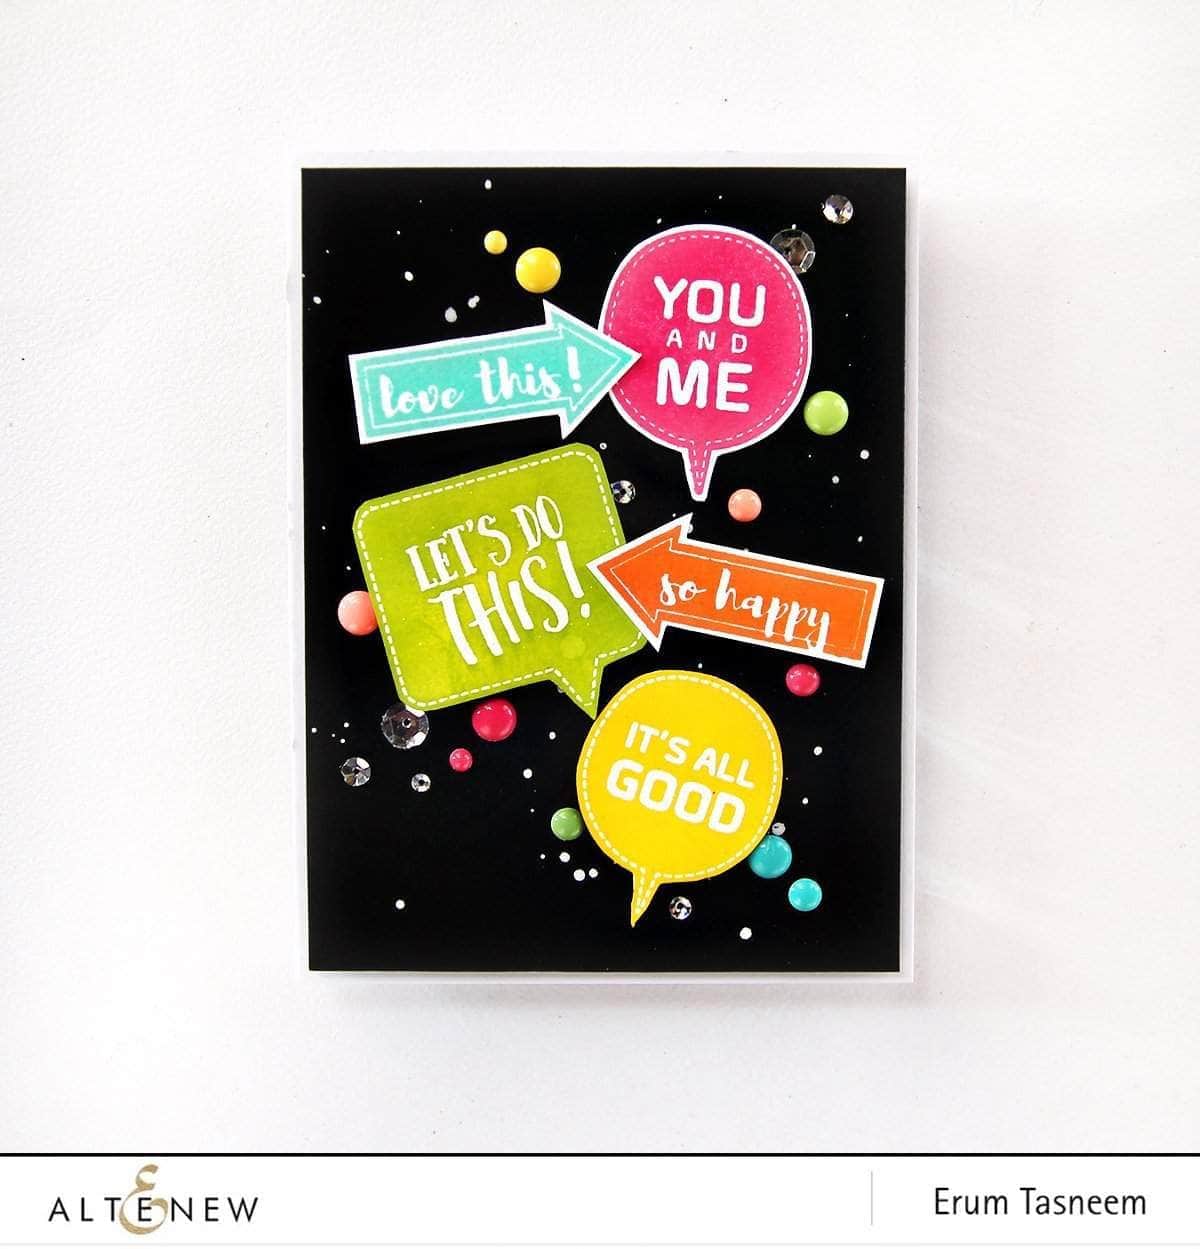 Altenew Creativity Kit Bundle Amazing Arrows Creativity Cardmaking Kit